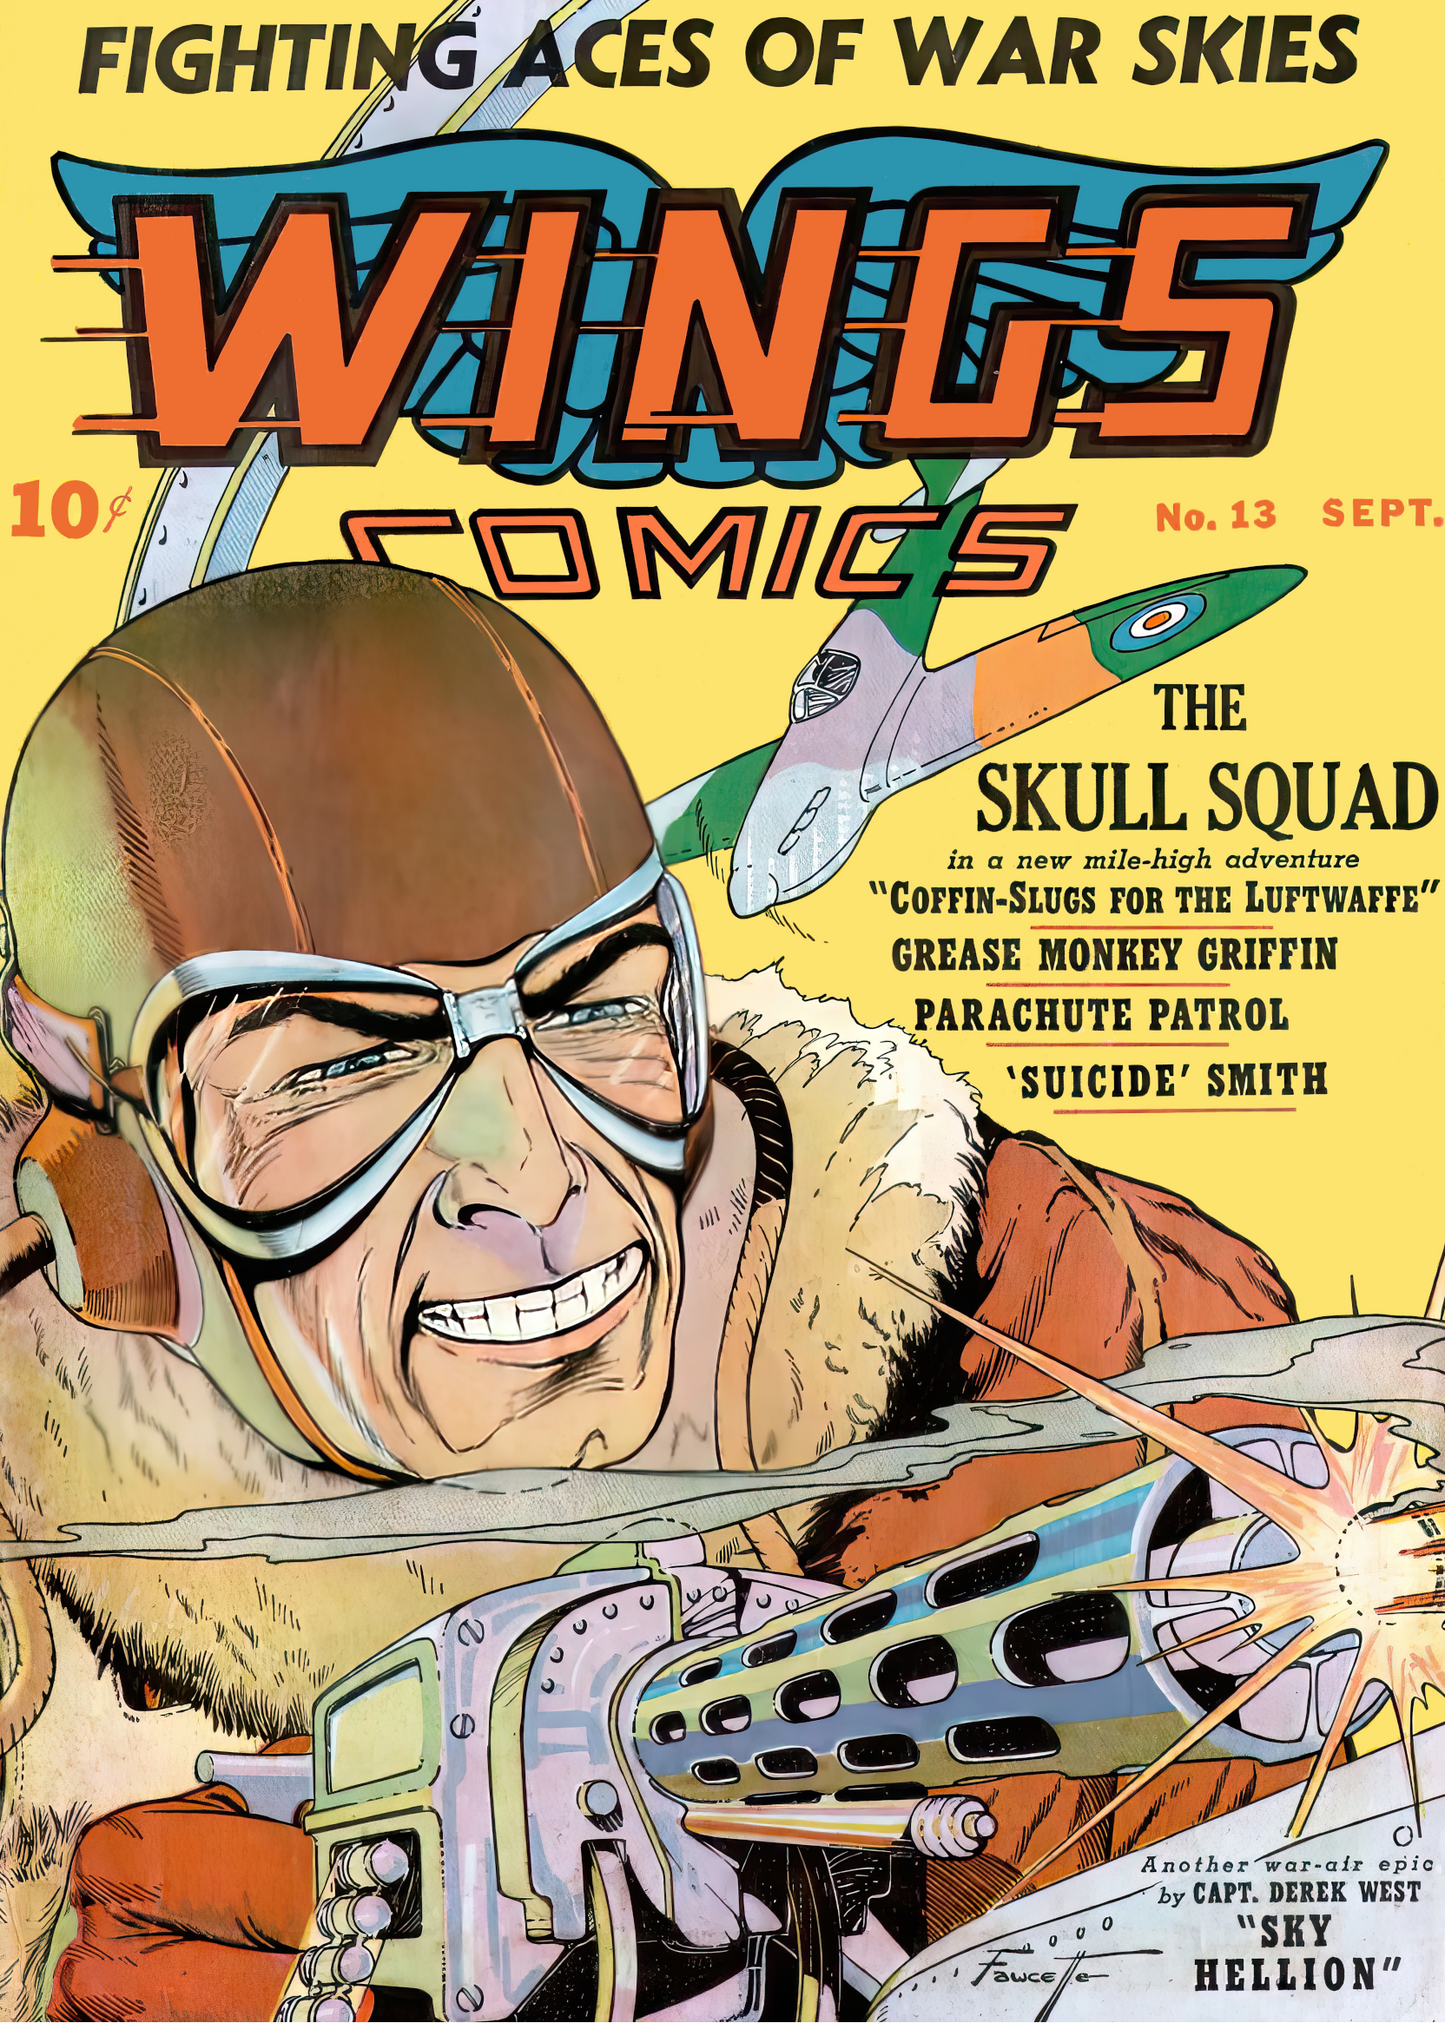 #1046 Wings Comics #13